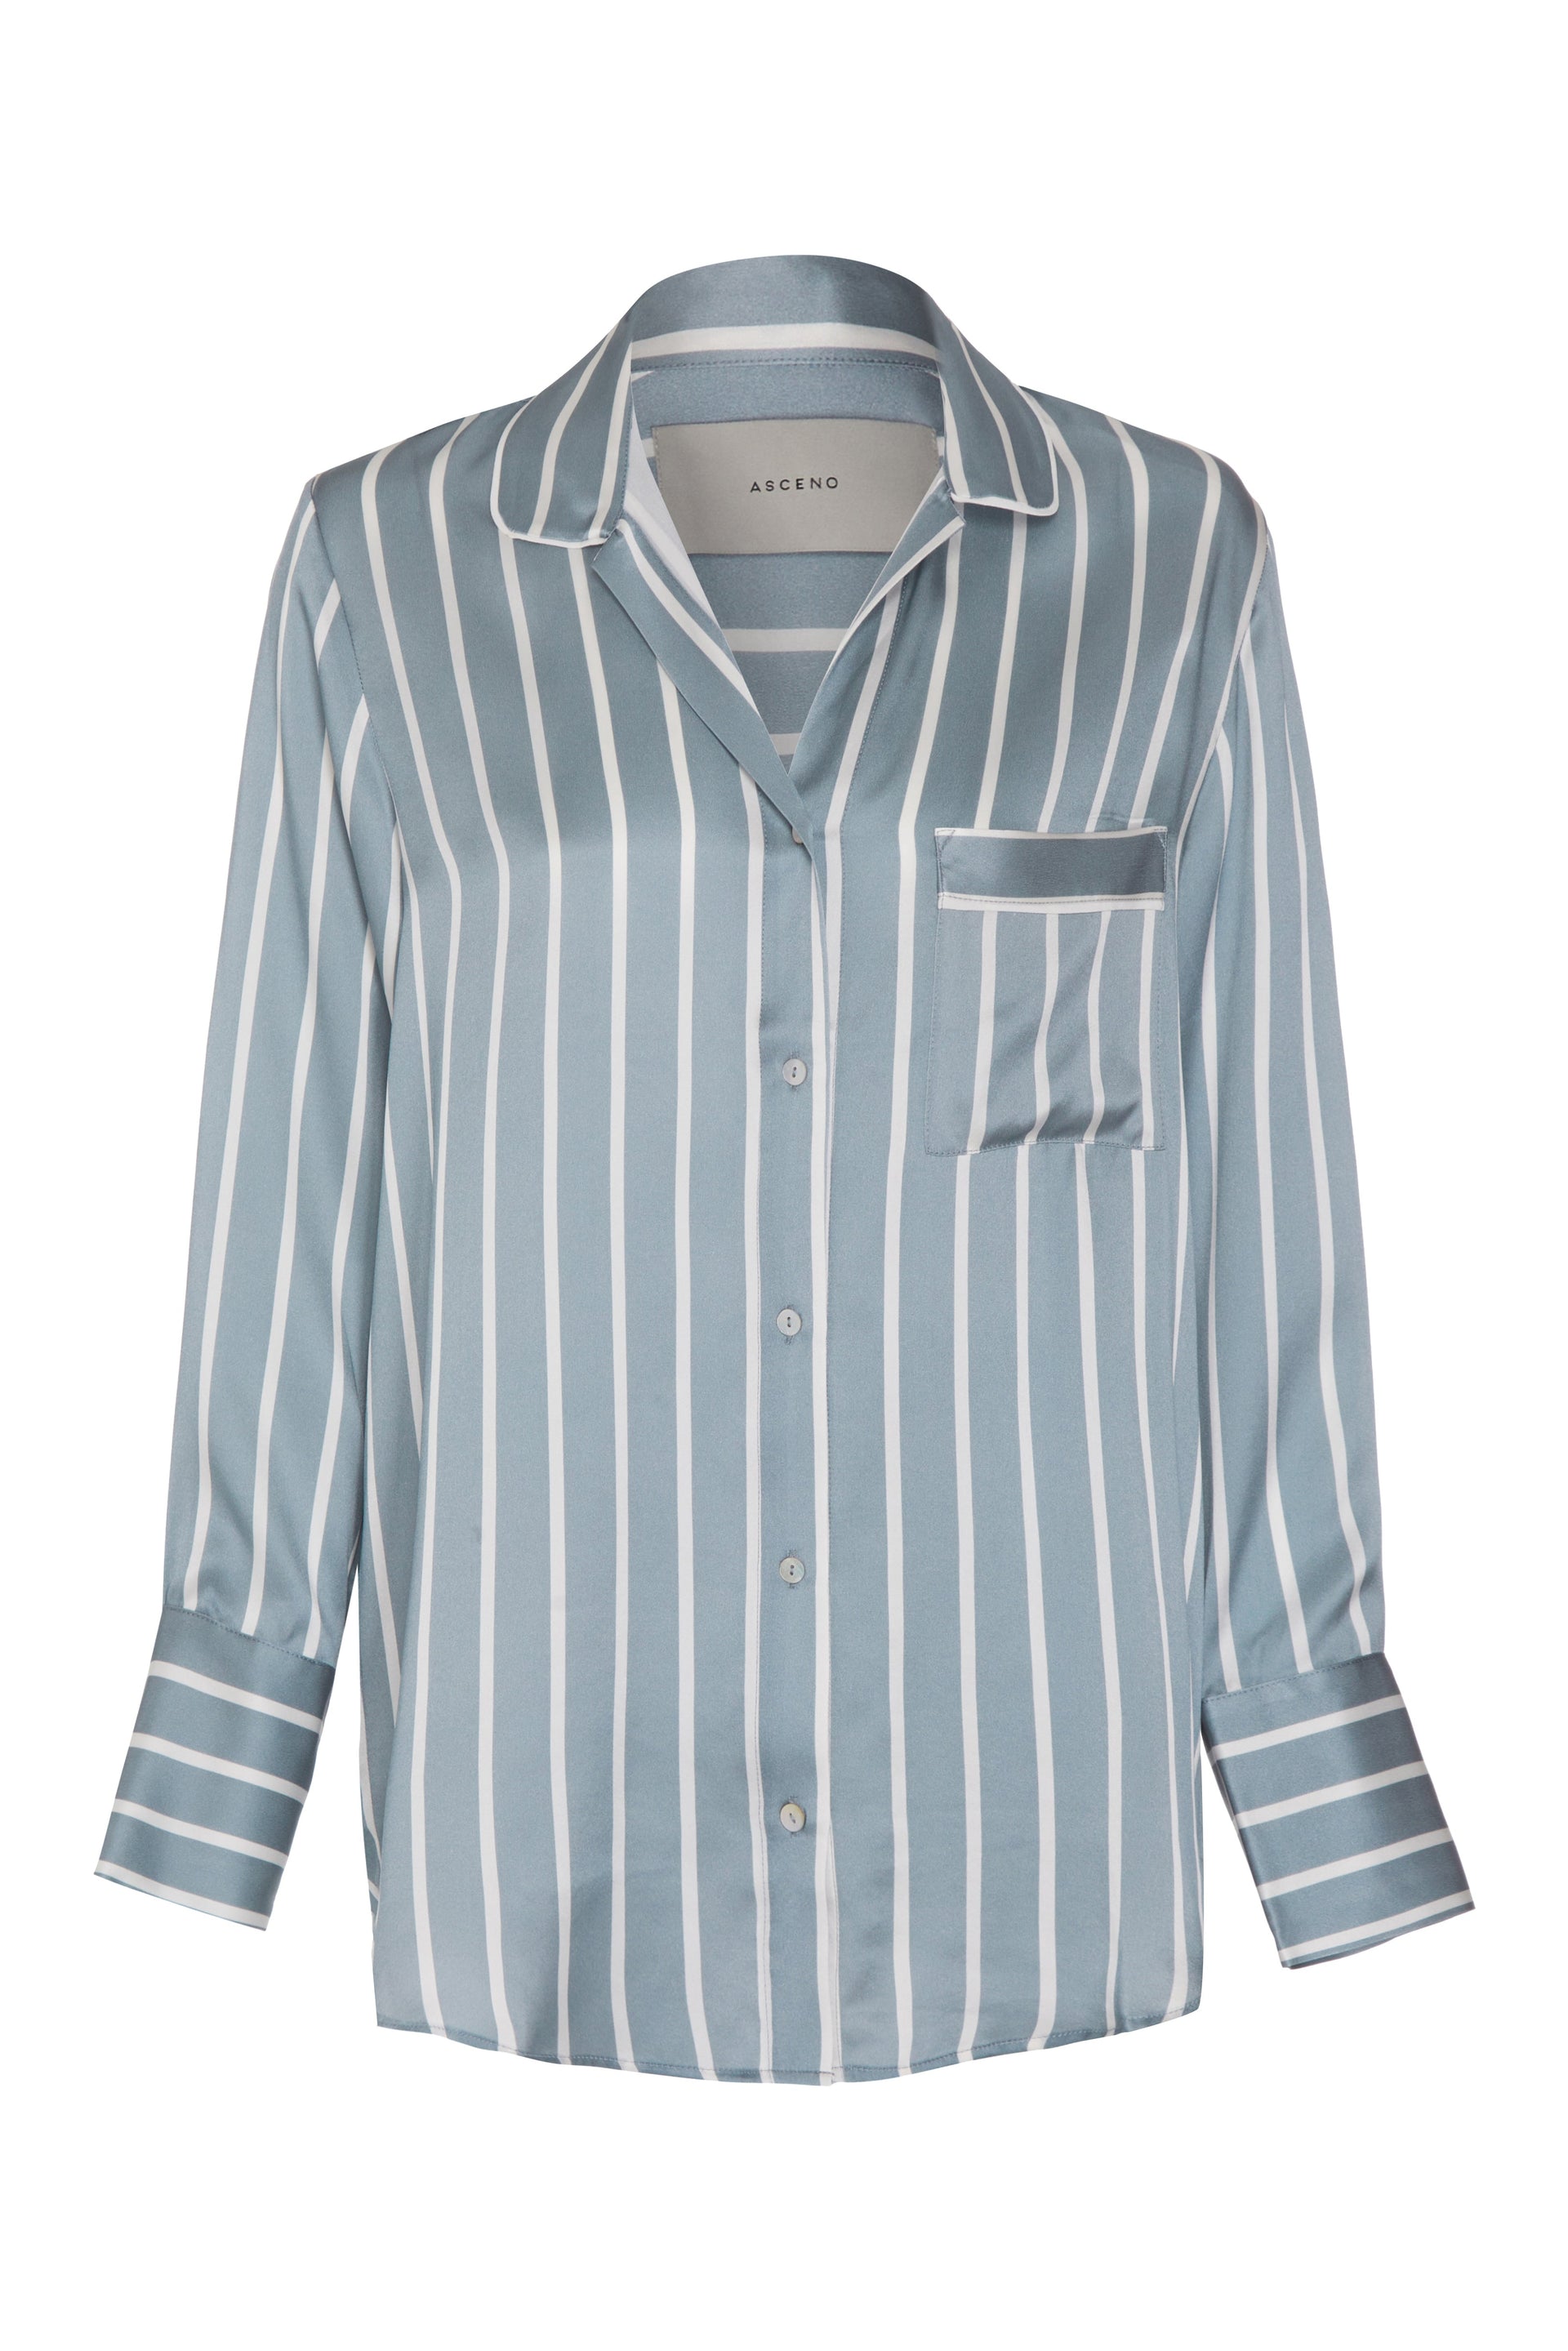 Paris Dust Blue Stripe Printed Silk Oversized Pyjama Shirt